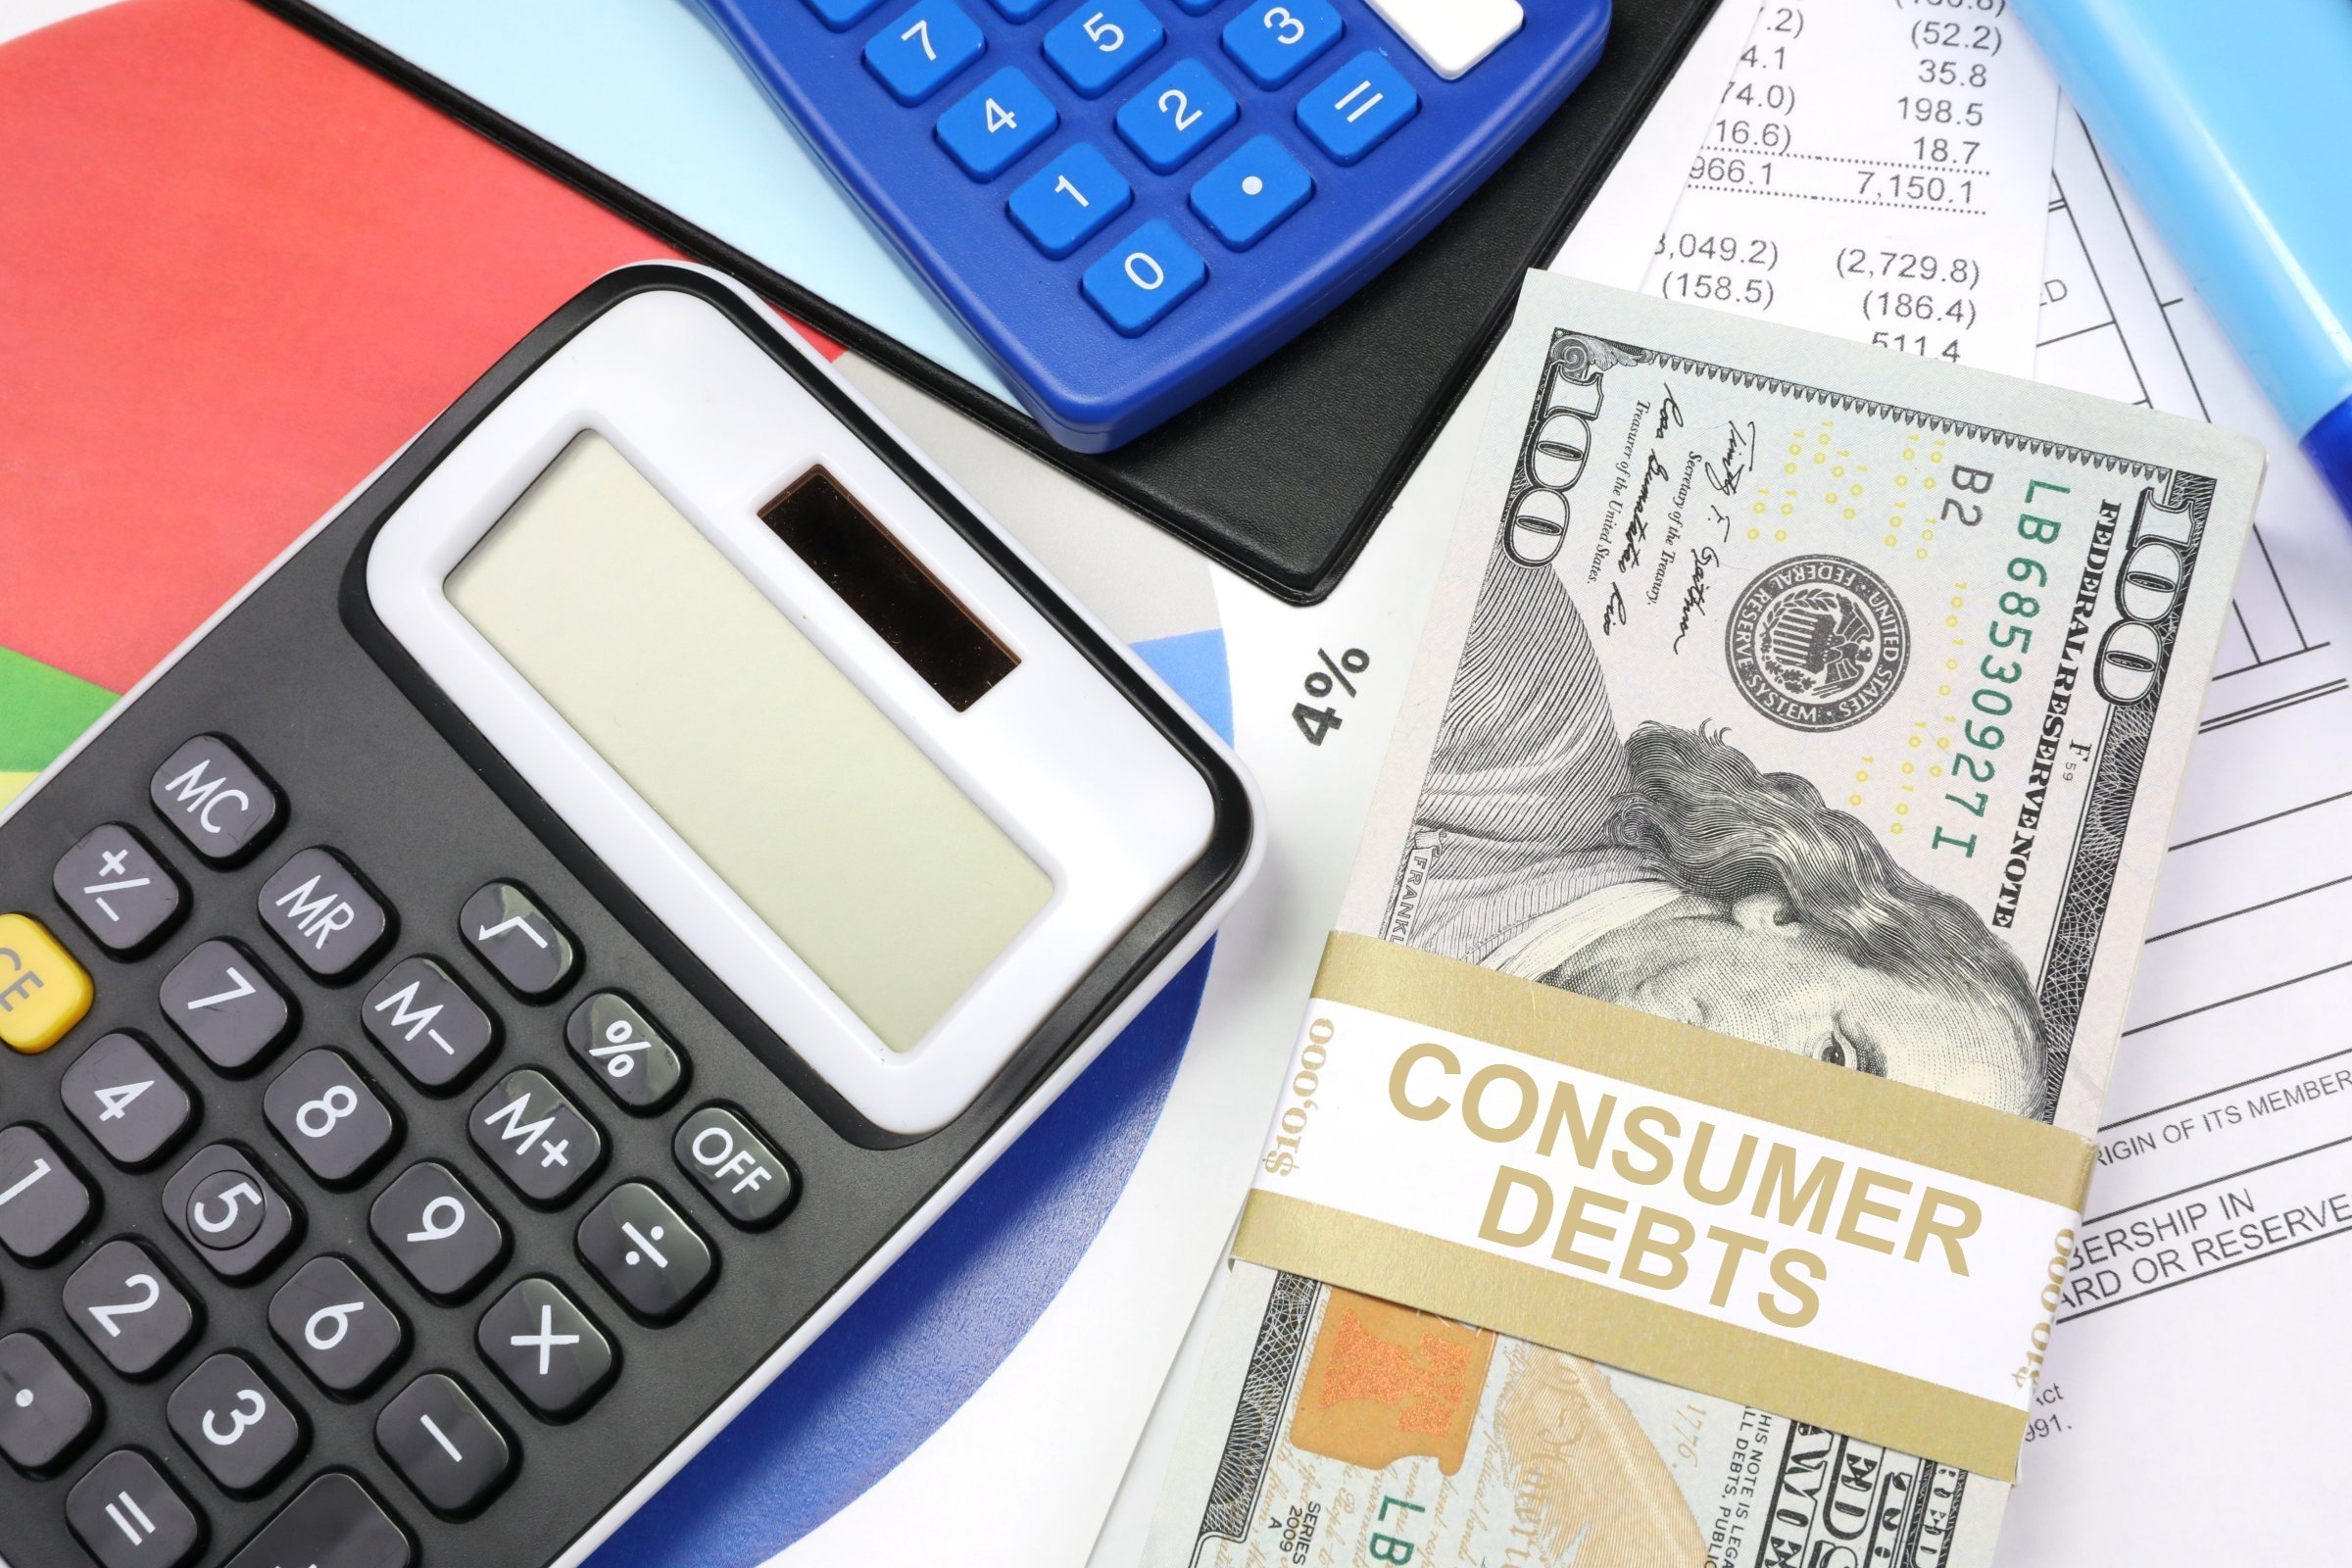 Consumer Debts